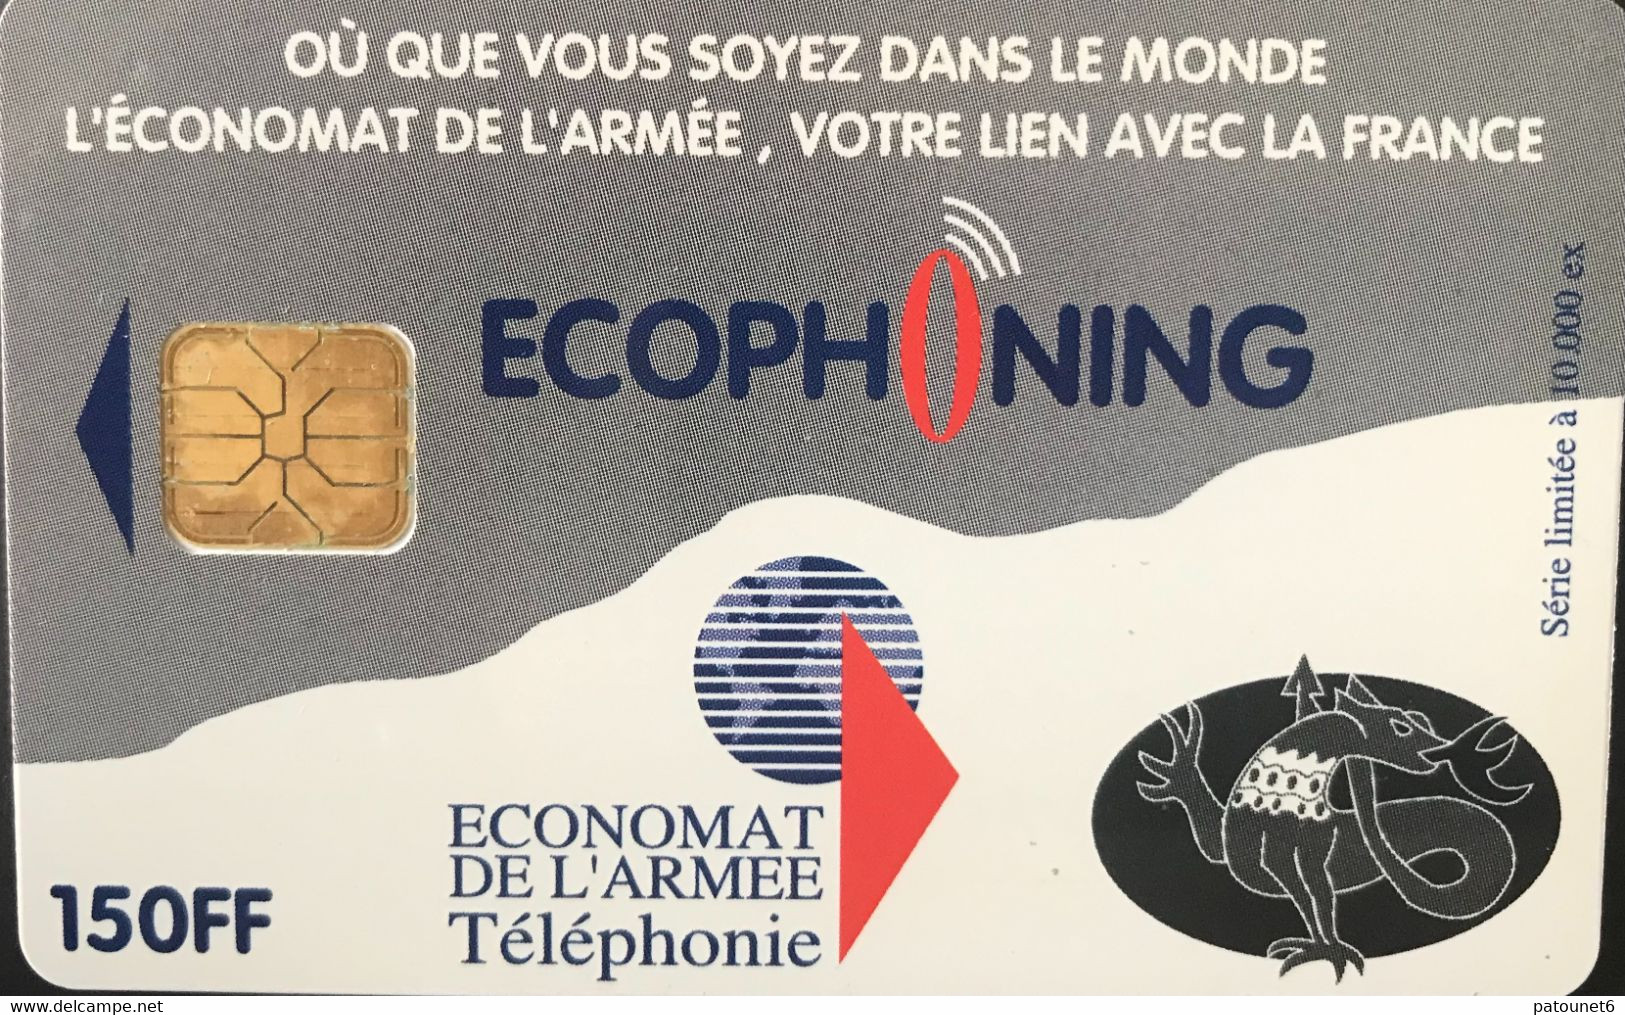 FRANCE  -  ARMEE  -  Phonecard  -  ECOPHONING  -  SALAMANDRE  -  Gris  -  150 FF - Military Phonecards